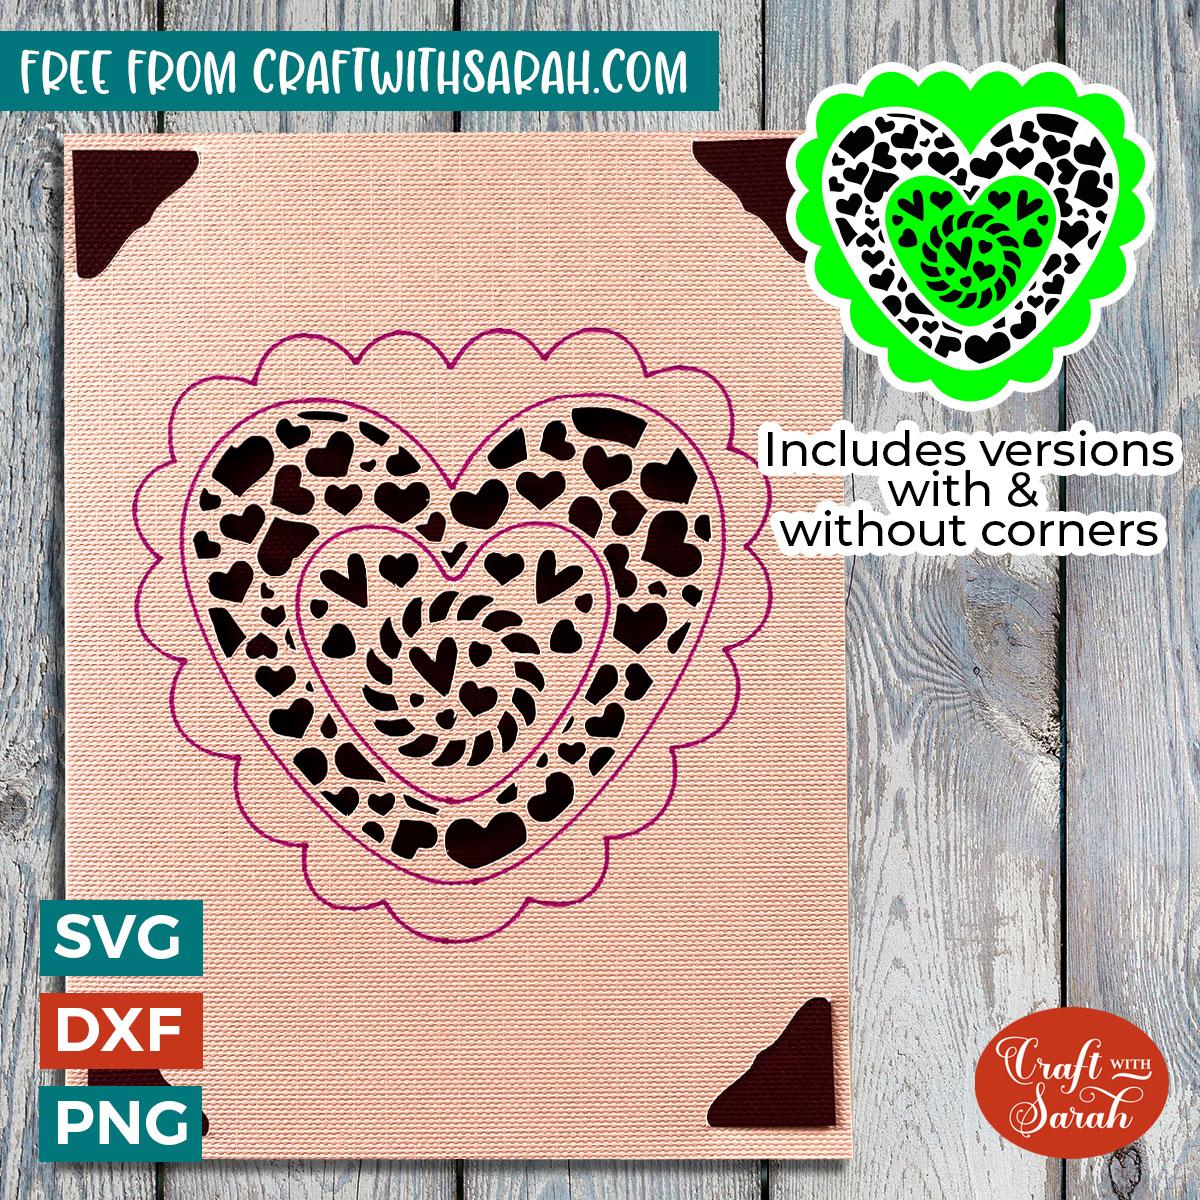 SVG: Valentines Day Insert Card. Cricut Joy Friendly. Draw 